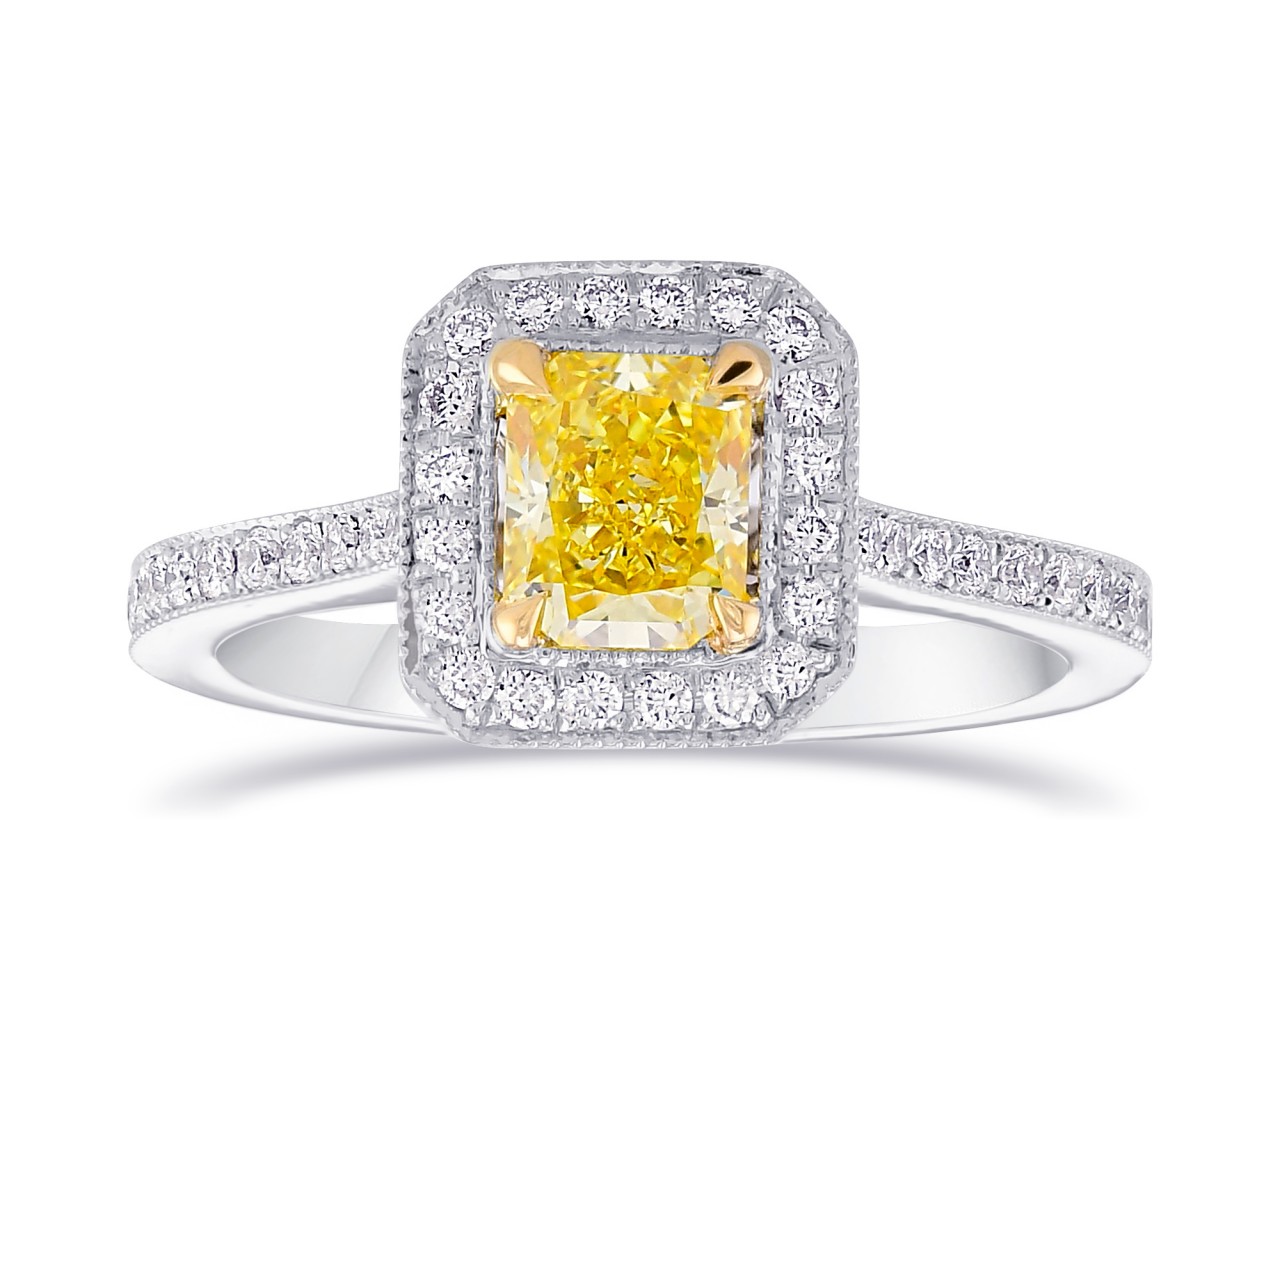 Fancy Intense Yellow Diamond Milgrain Halo Ring, SKU 77658 (1.18Ct TW)